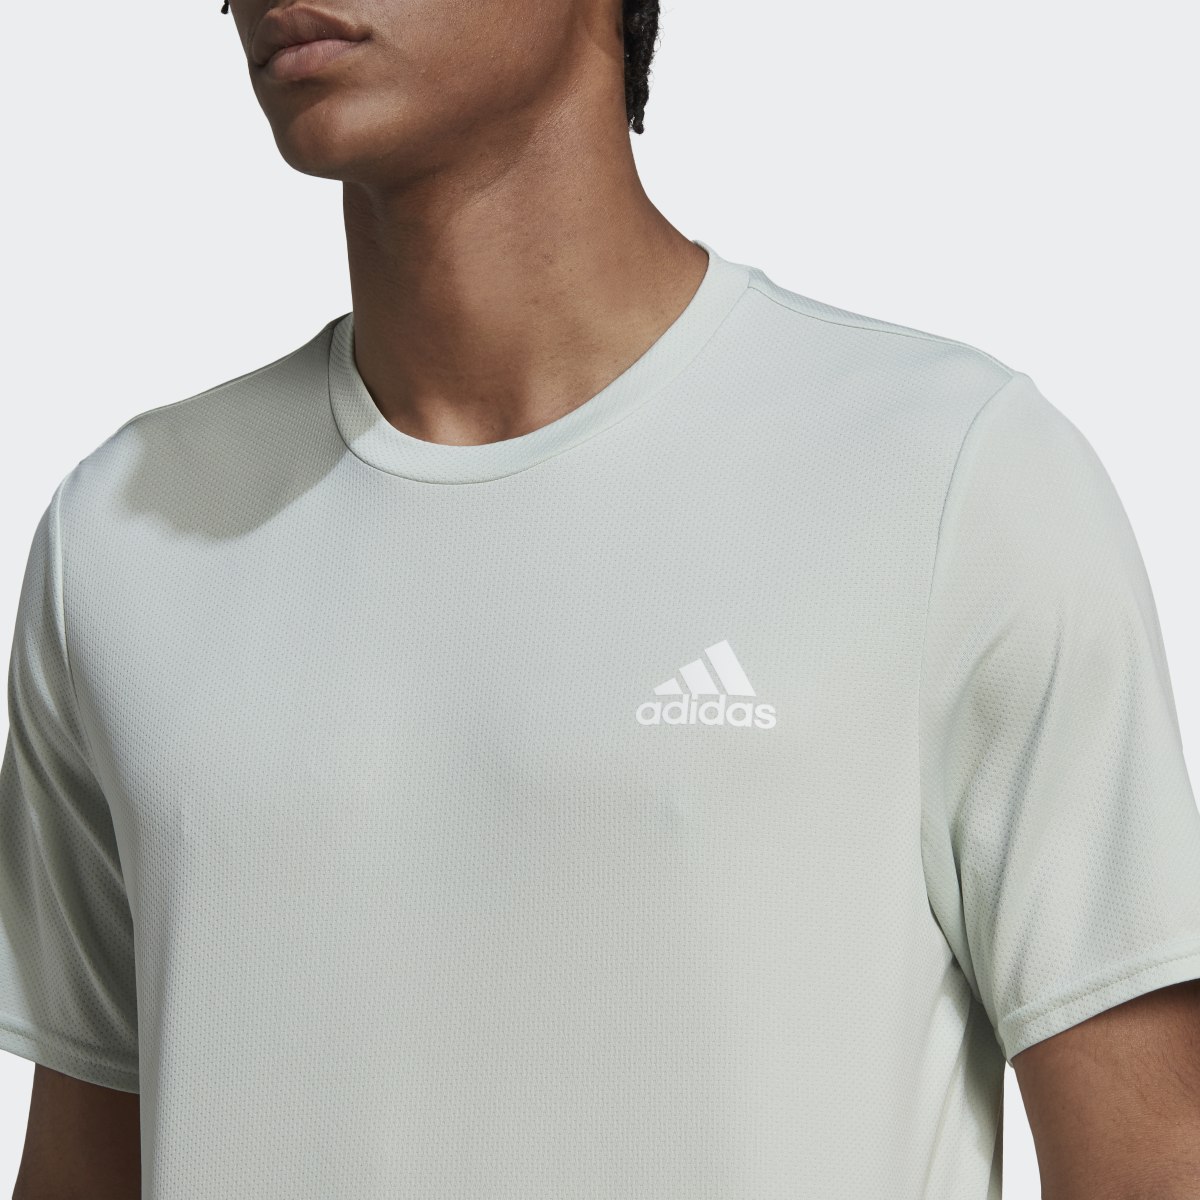 Adidas Camiseta AEROREADY Designed for Movement. 6